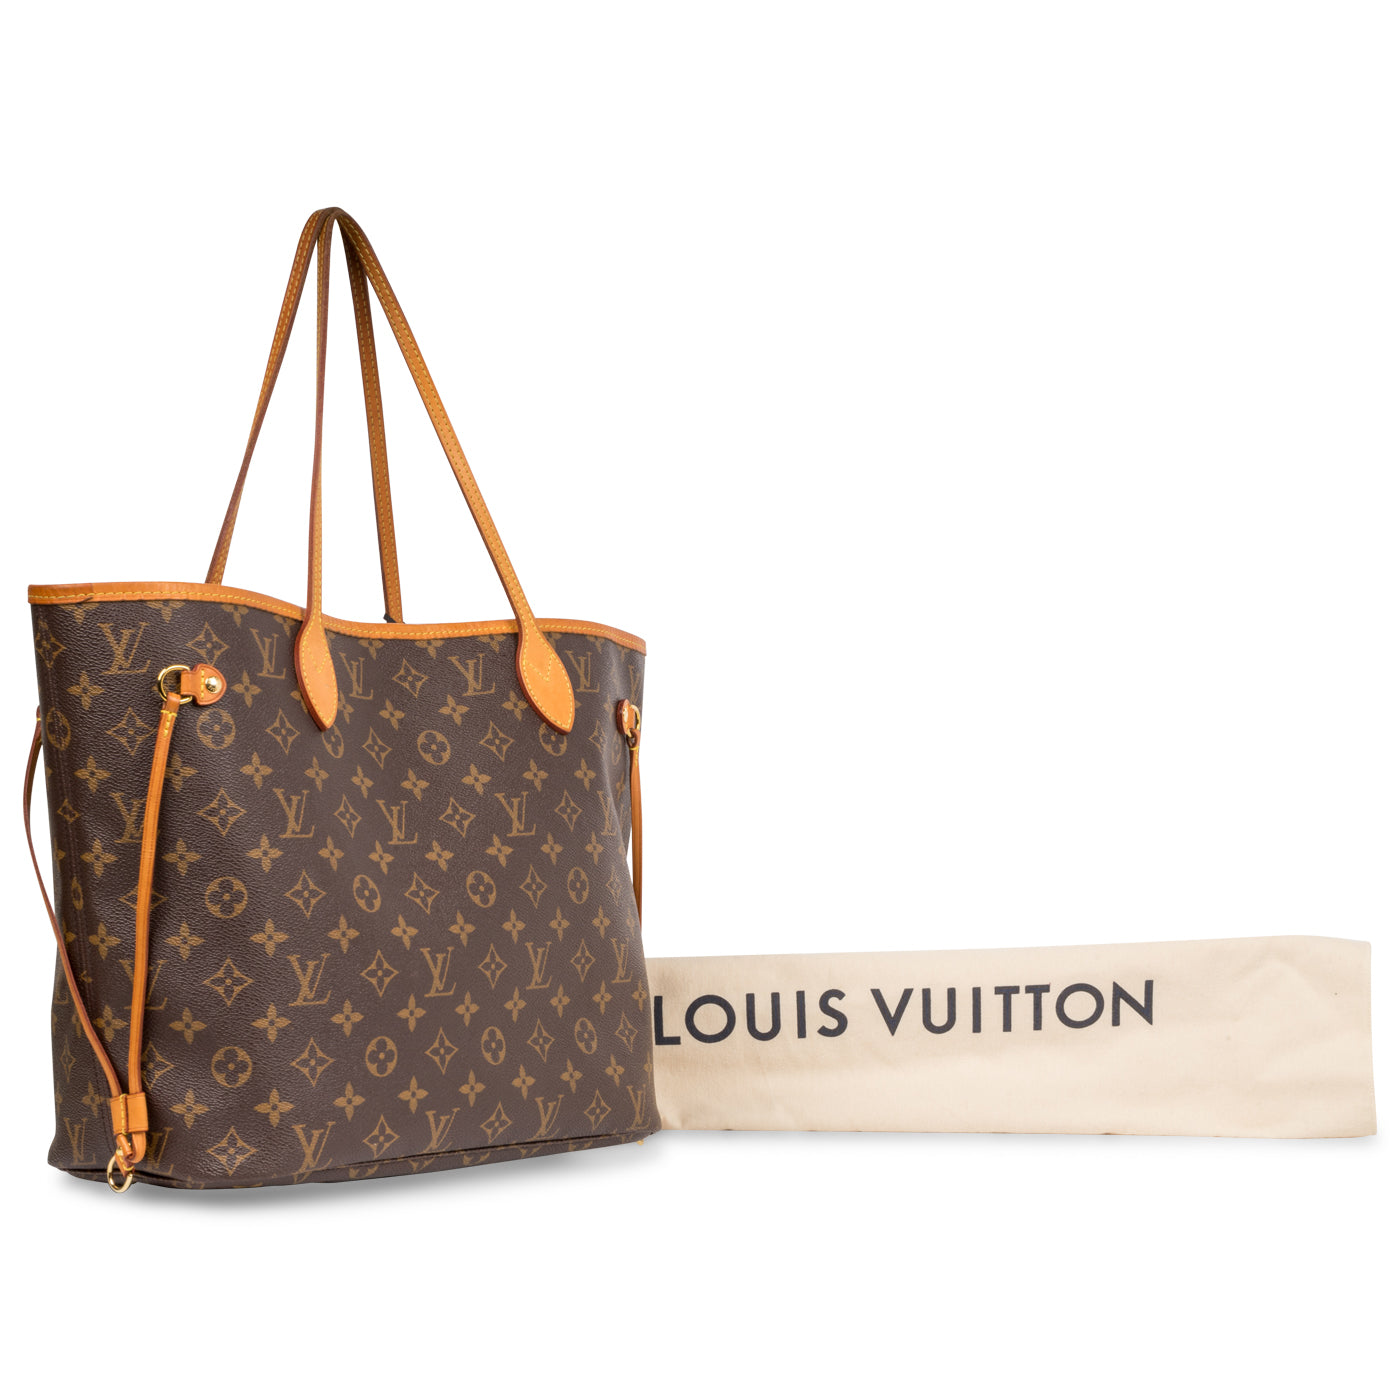 Louis Vuitton - Neverfull MM - Monogram Canvas - Pre-Loved